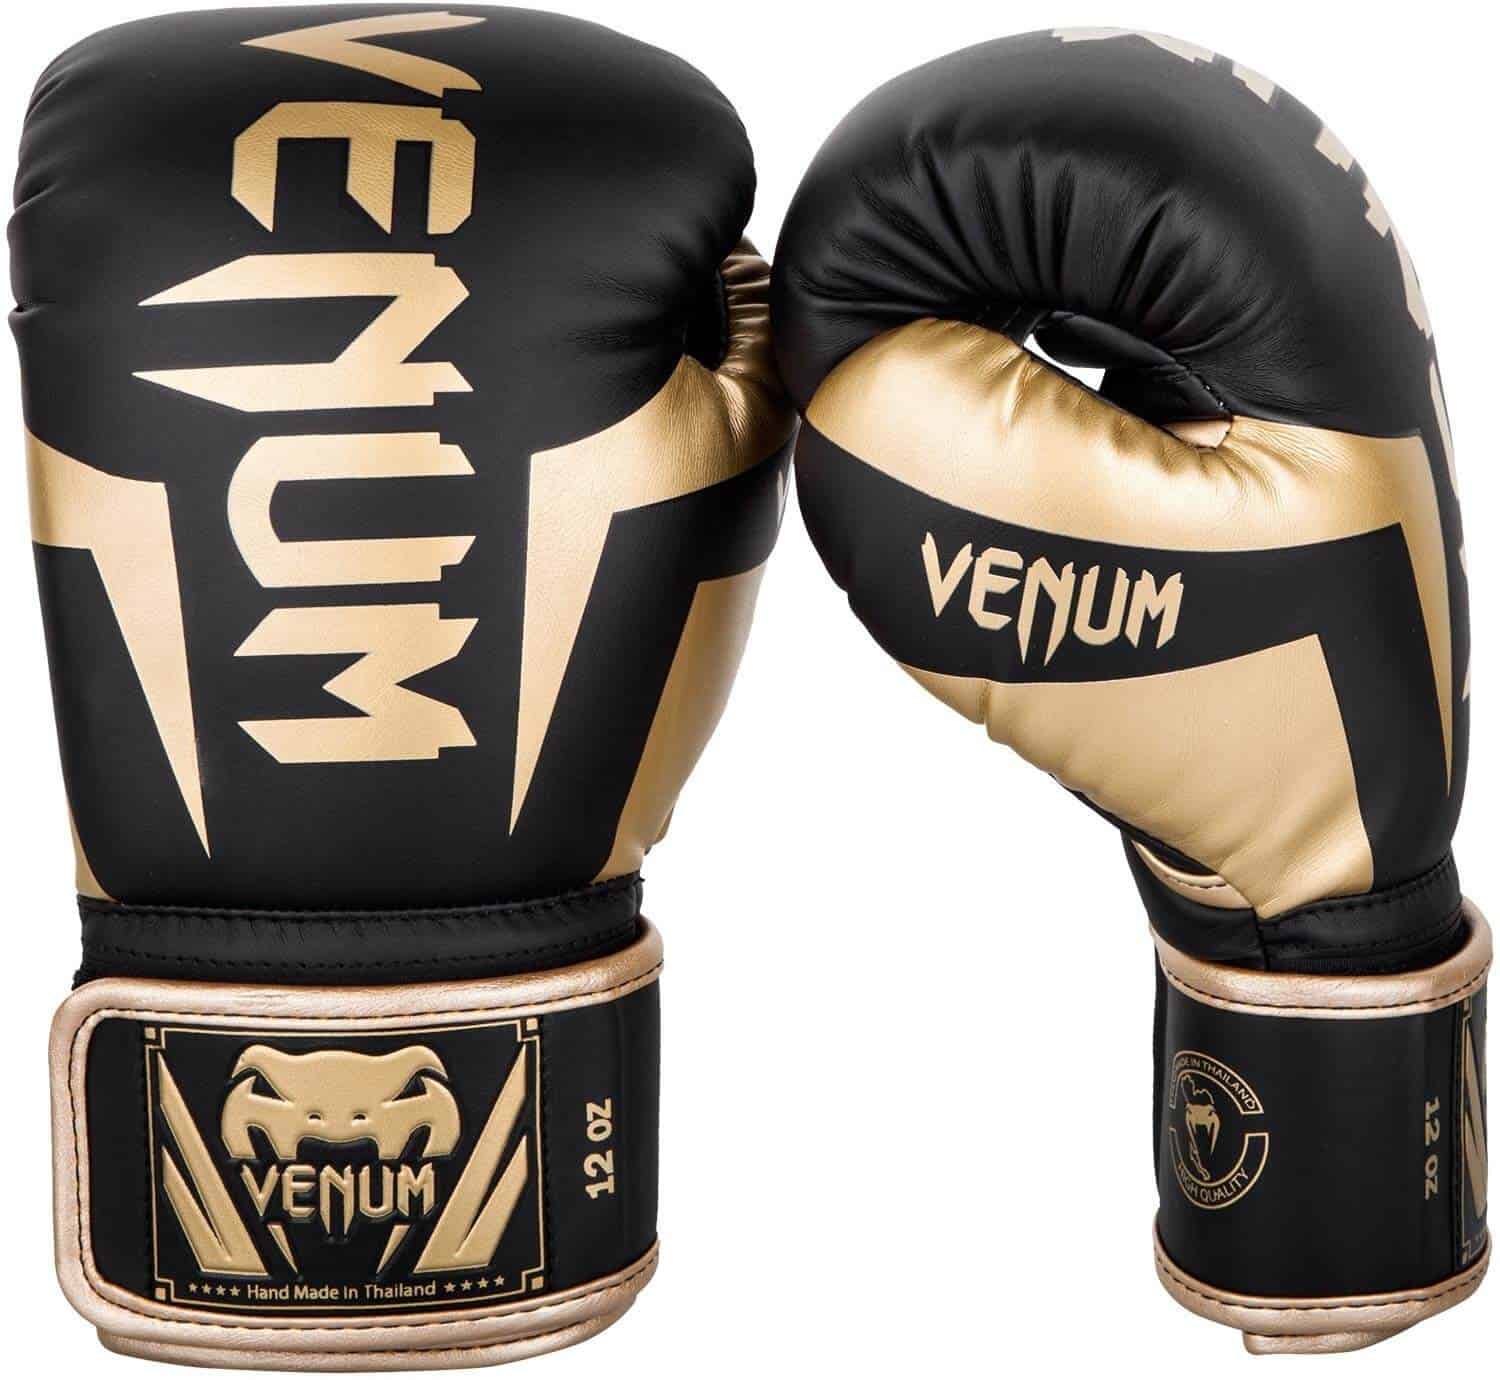 5+ Best Boxing Gloves To Buy In Australia For 2022